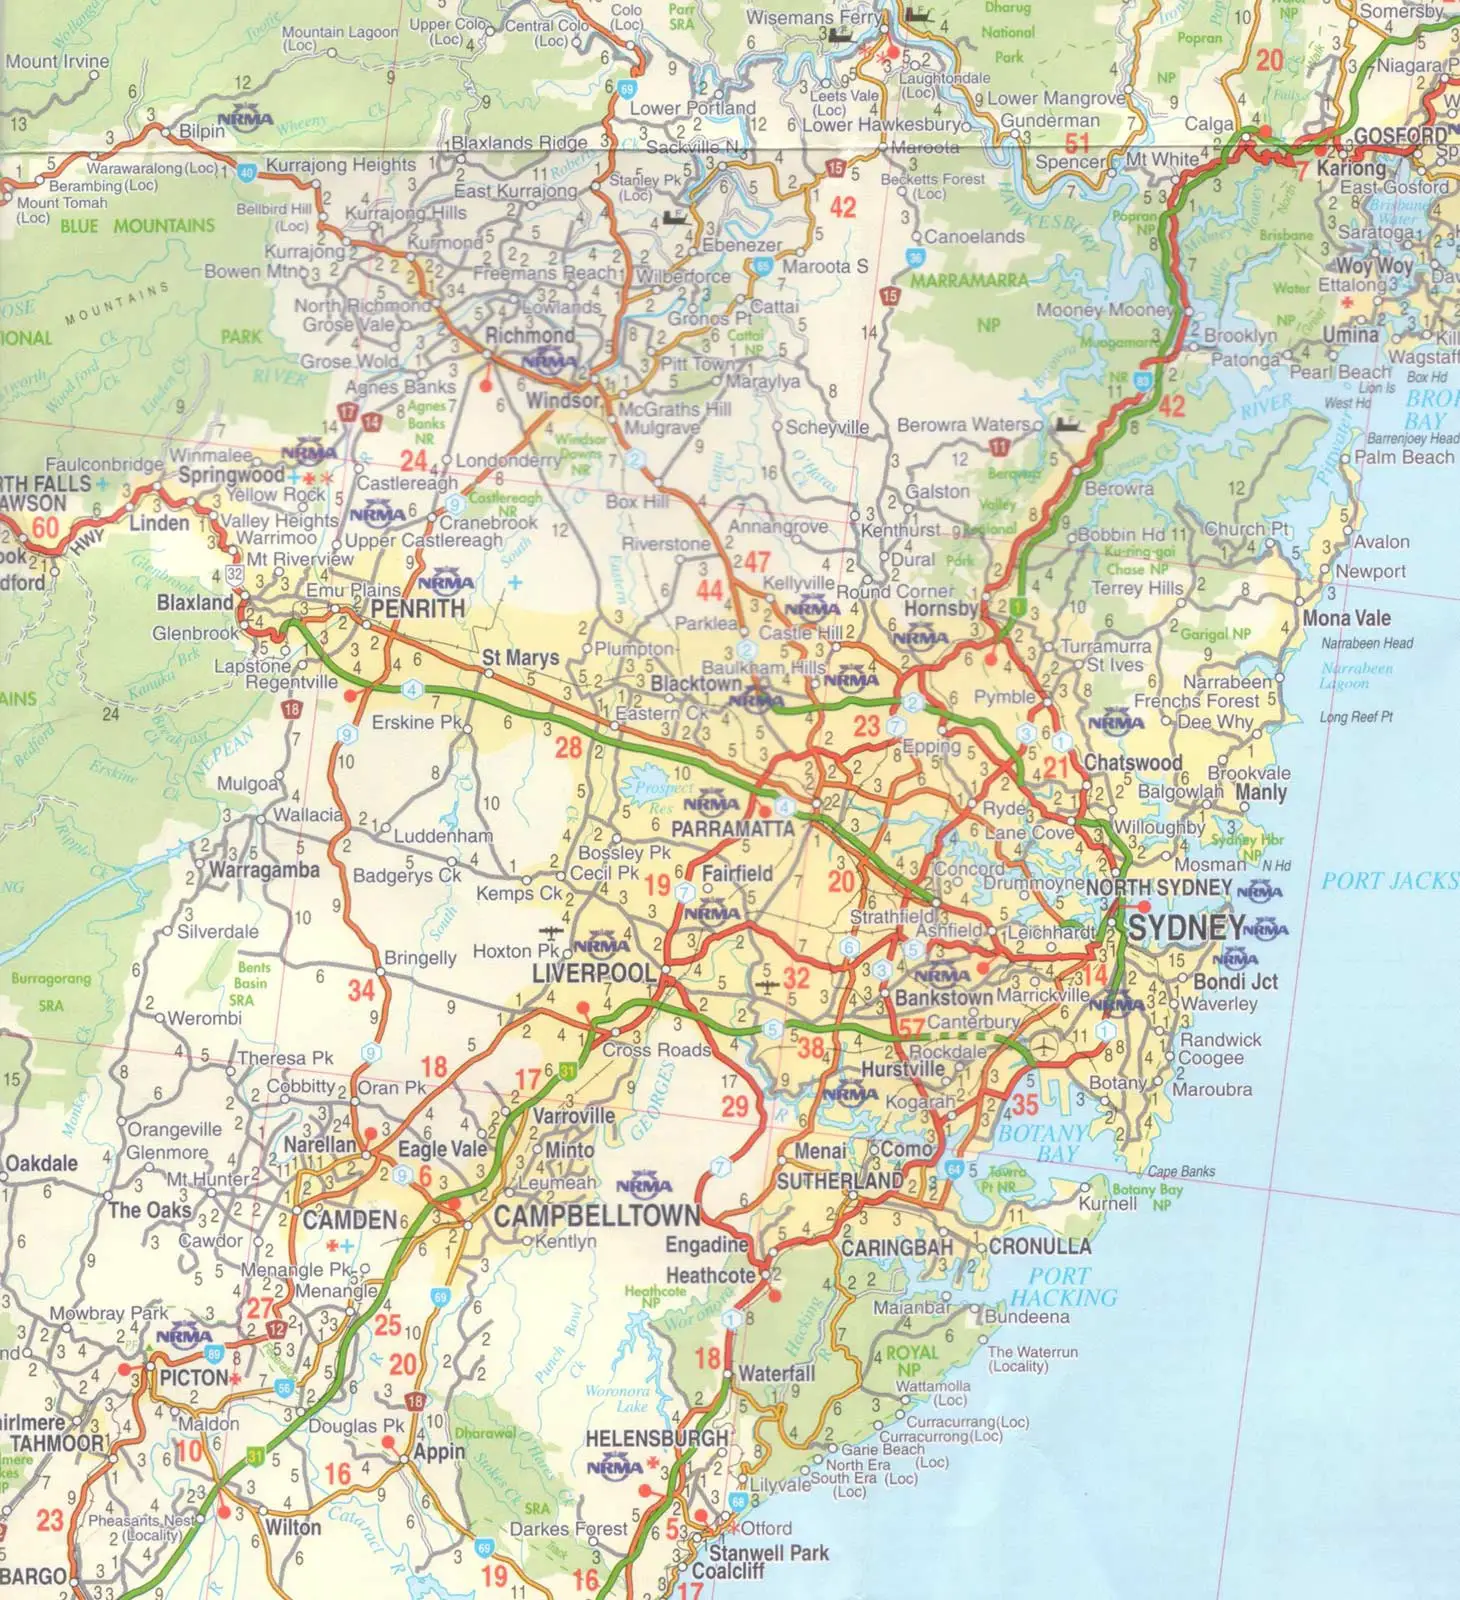 Map of Sydney